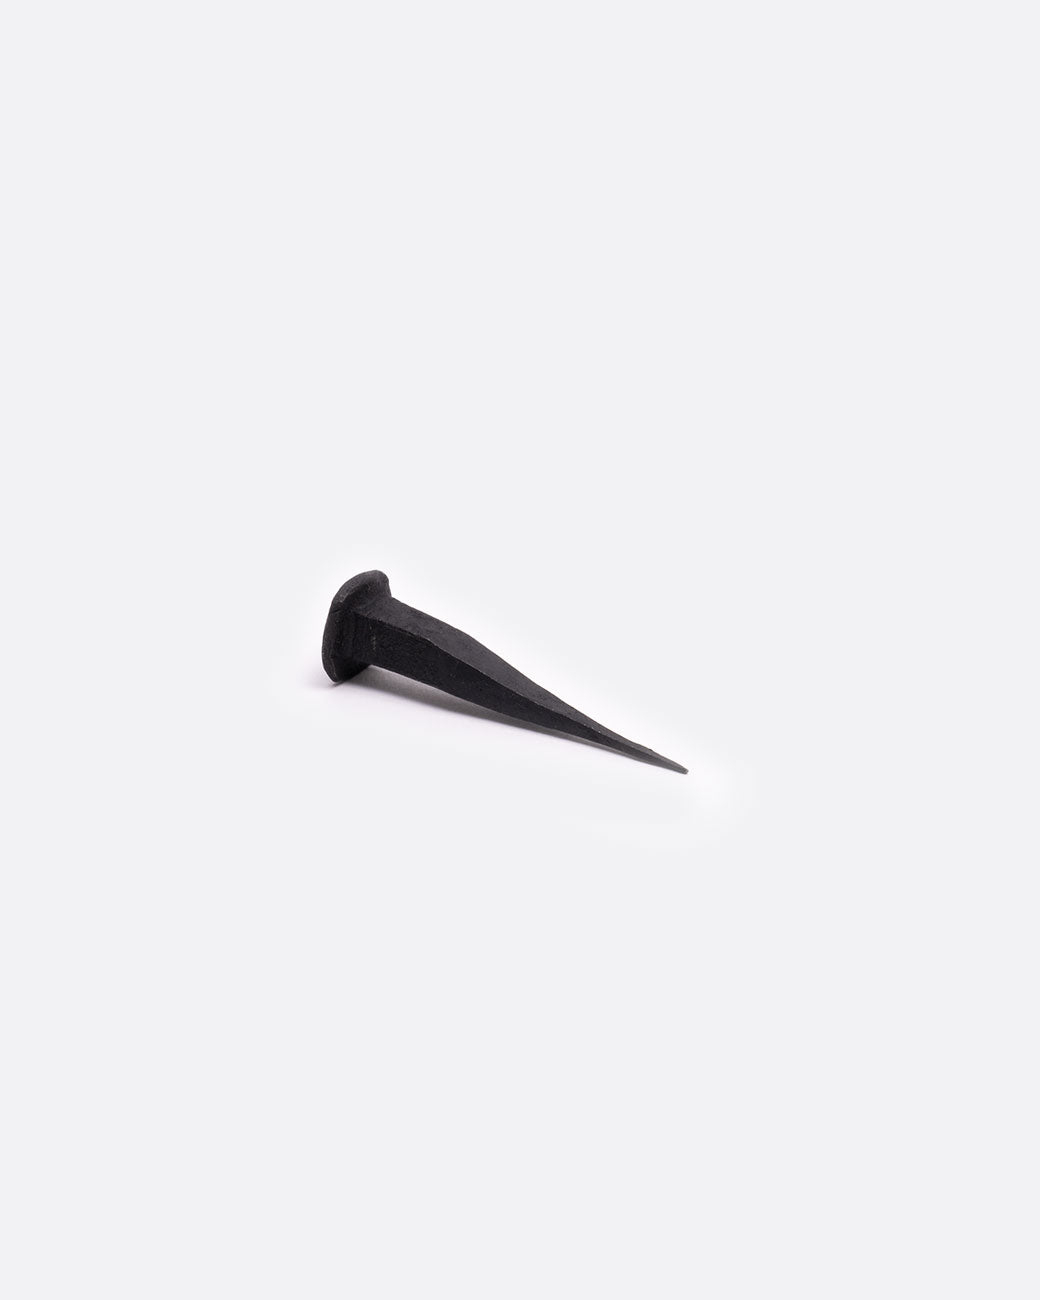 A single flat head iron nail.